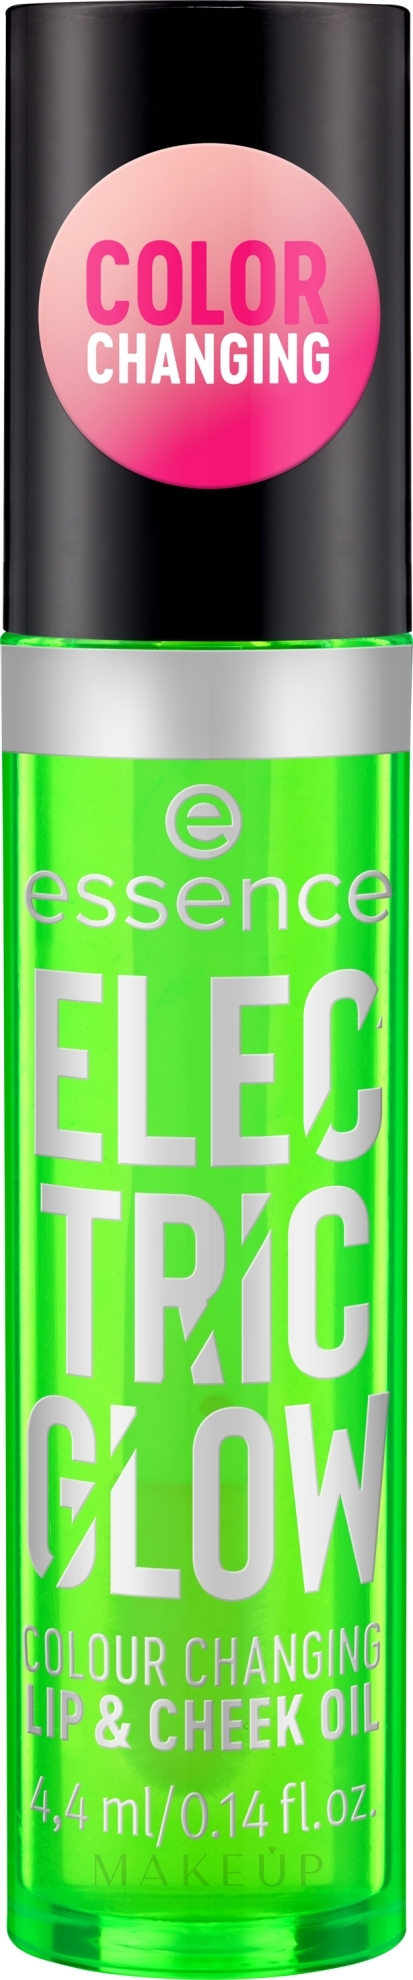 Essence Electric Glow Color Changing Lip & Cheek Oil - Essence Electric Glow Color Changing Lip & Cheek Oil — Bild 4.4 ml